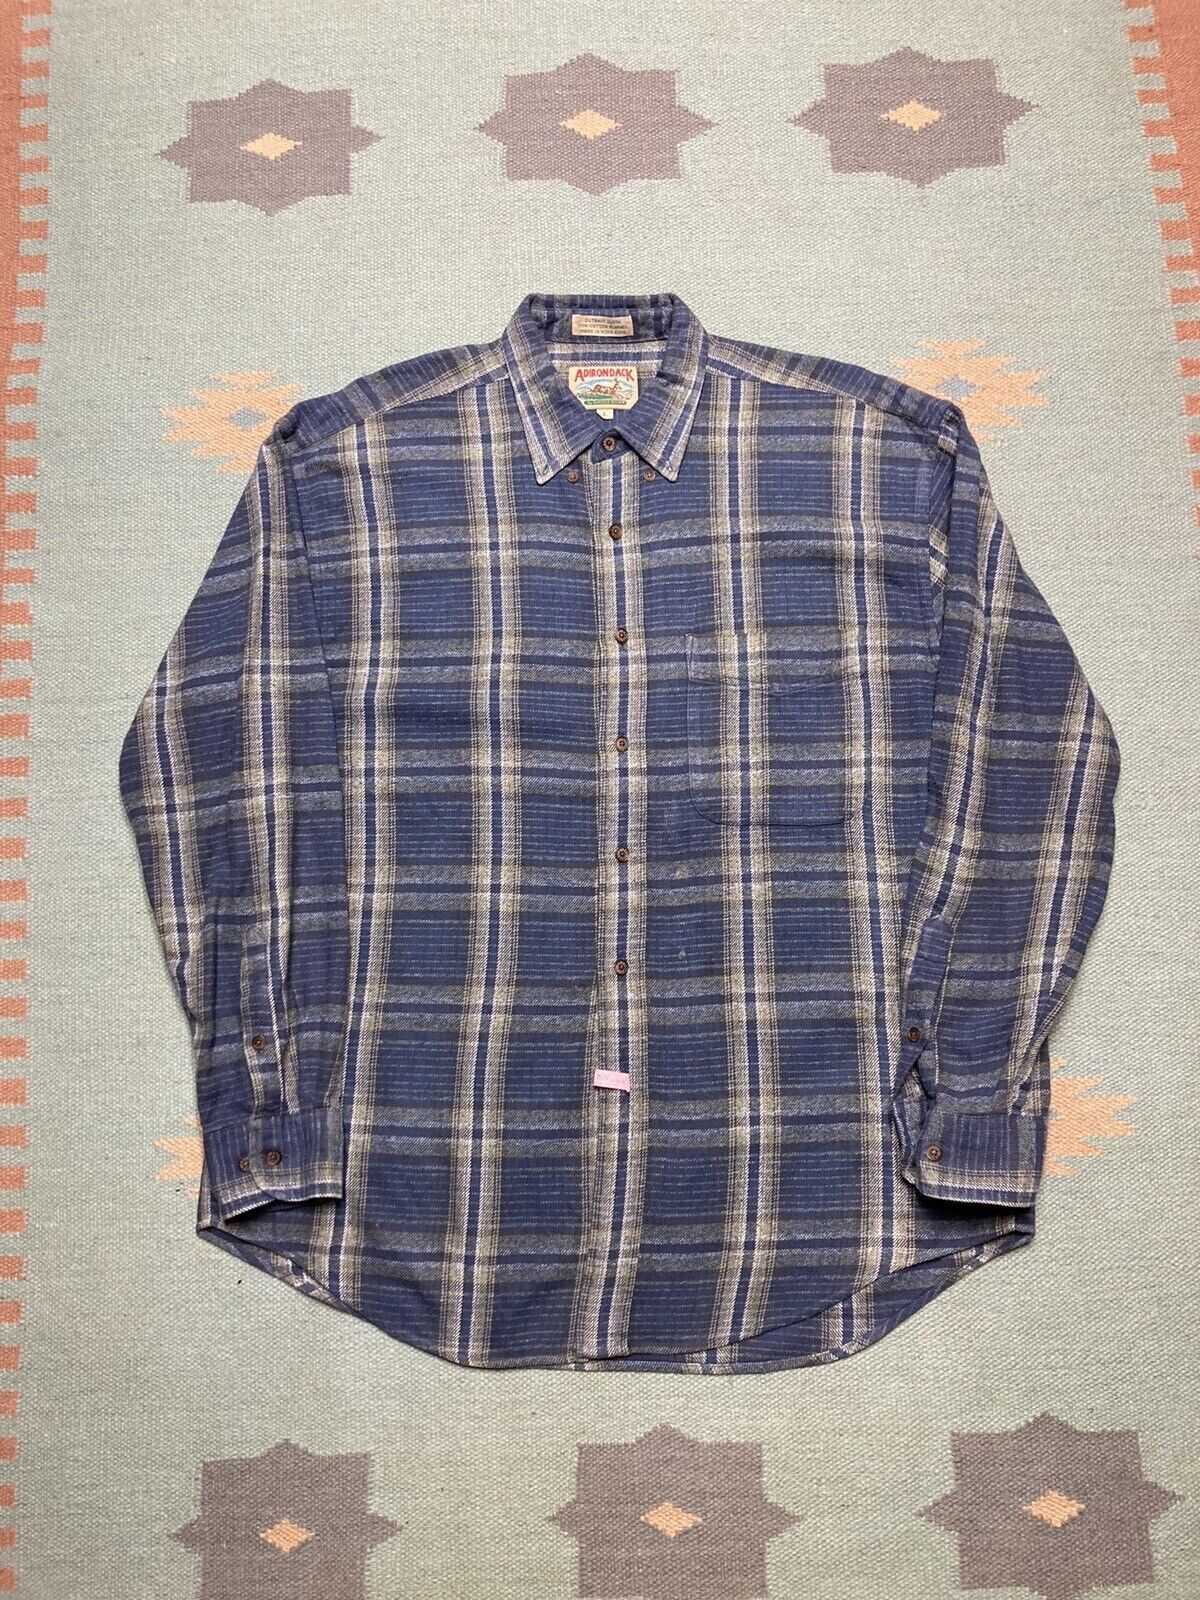 Vintage Adirondack cotton flannel shirt plaid Outback cloth savile